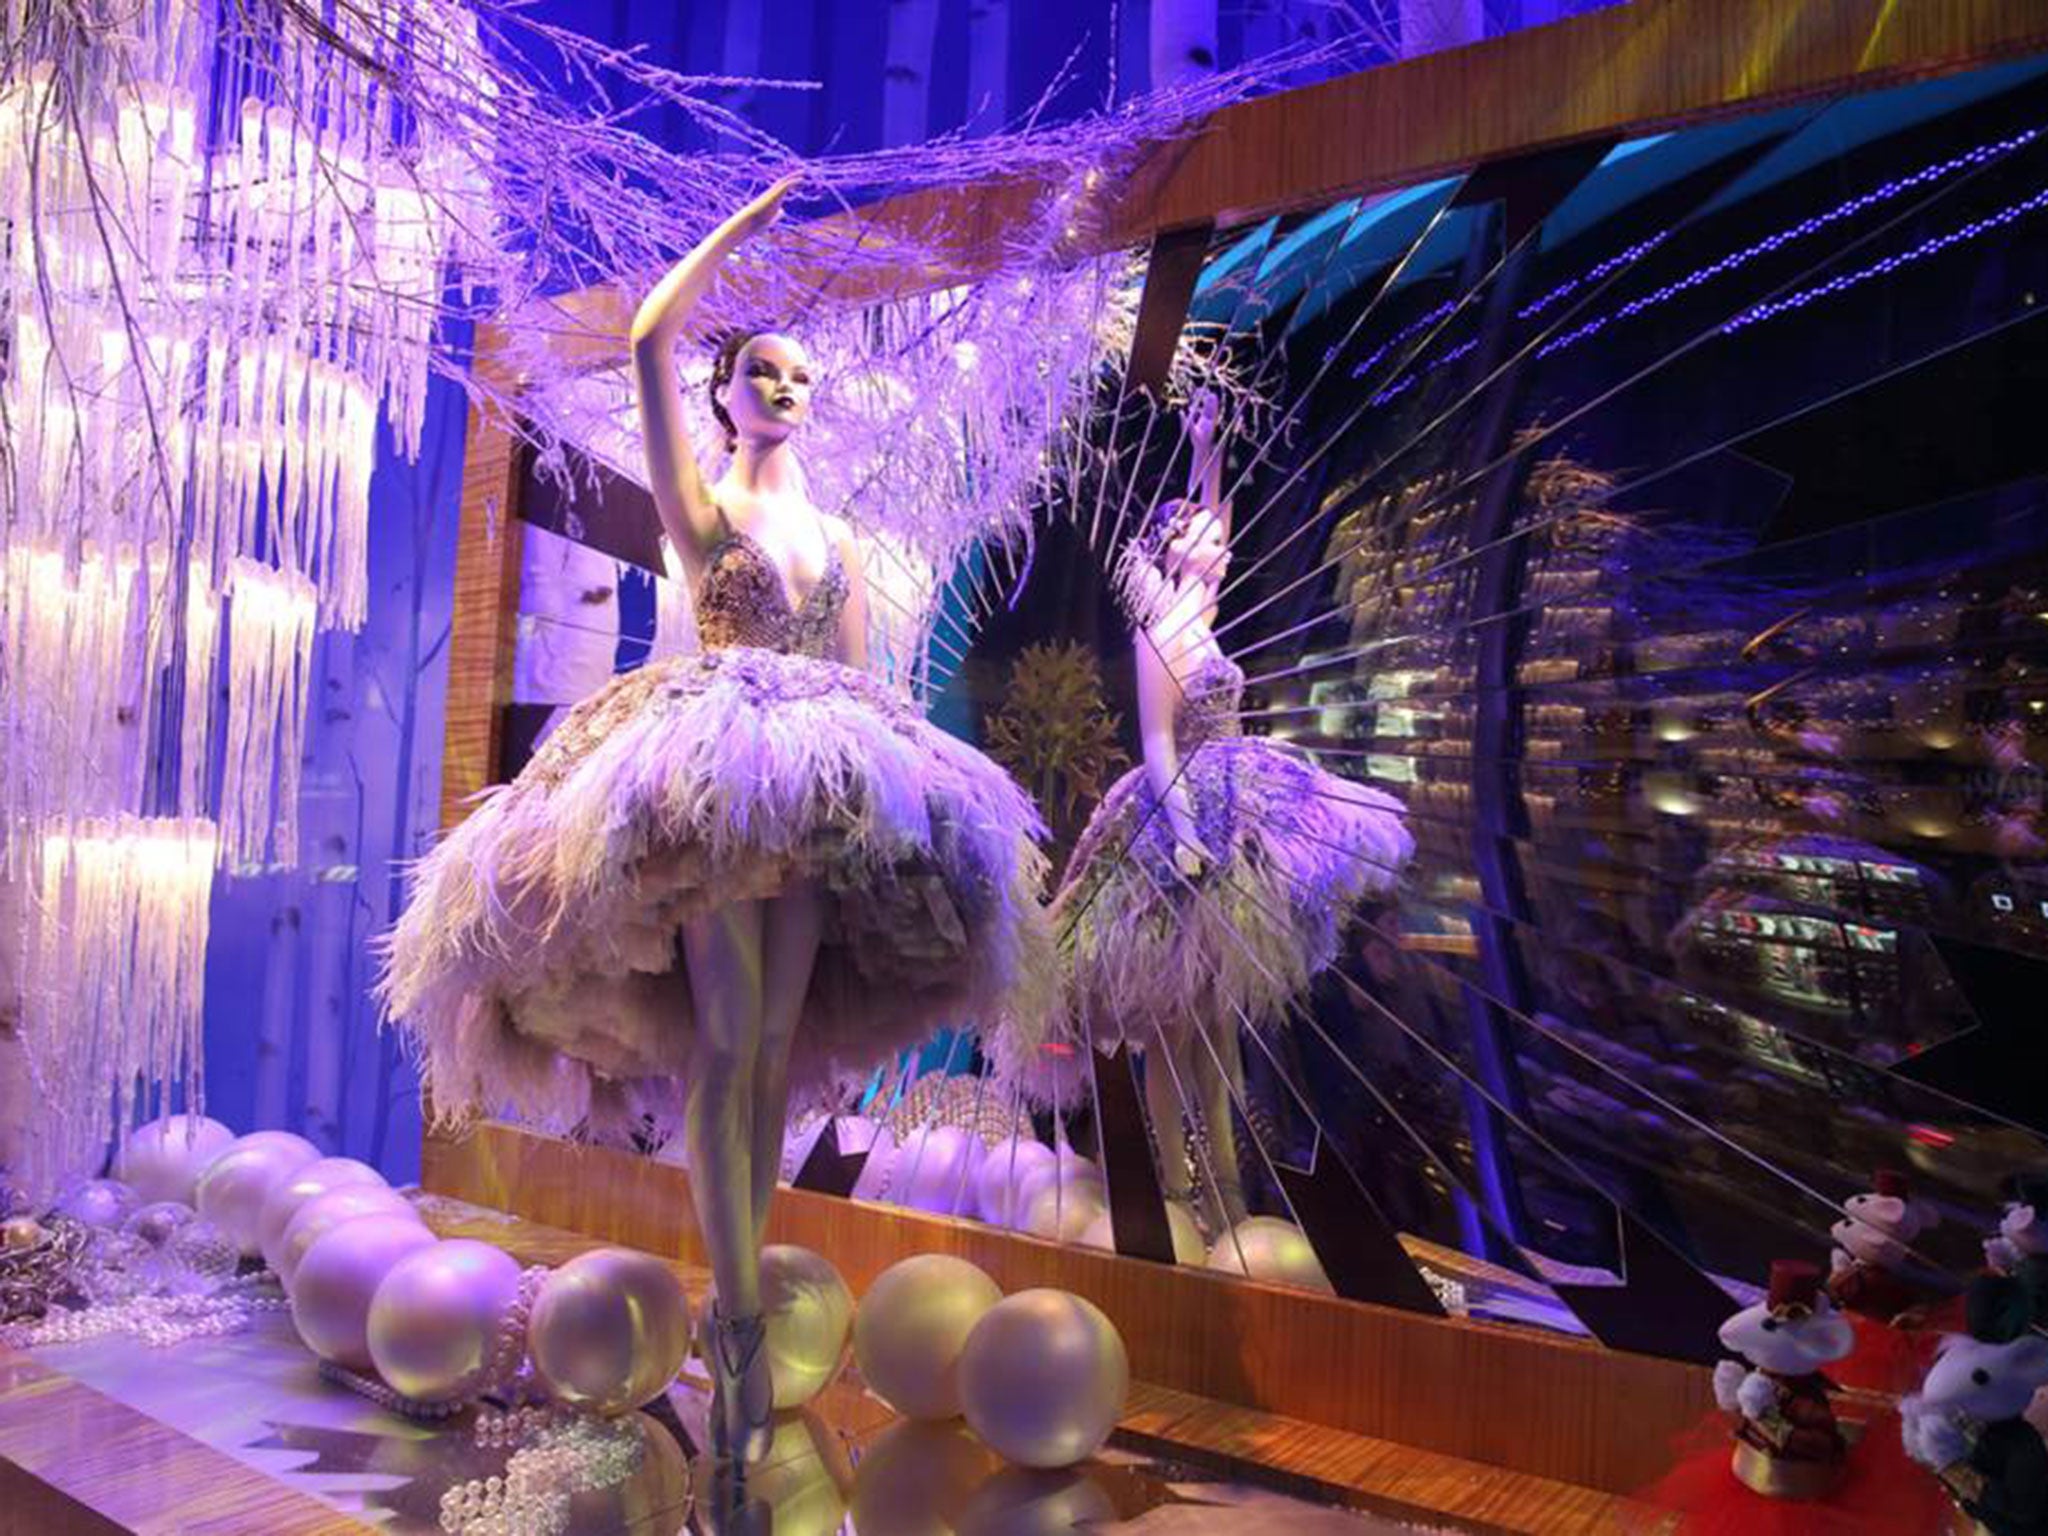 Harrods' Christmas' window display features a ballerina wearing a bespoke hand-embellished dress created by Lebanese fashion designer Zuhair Murad